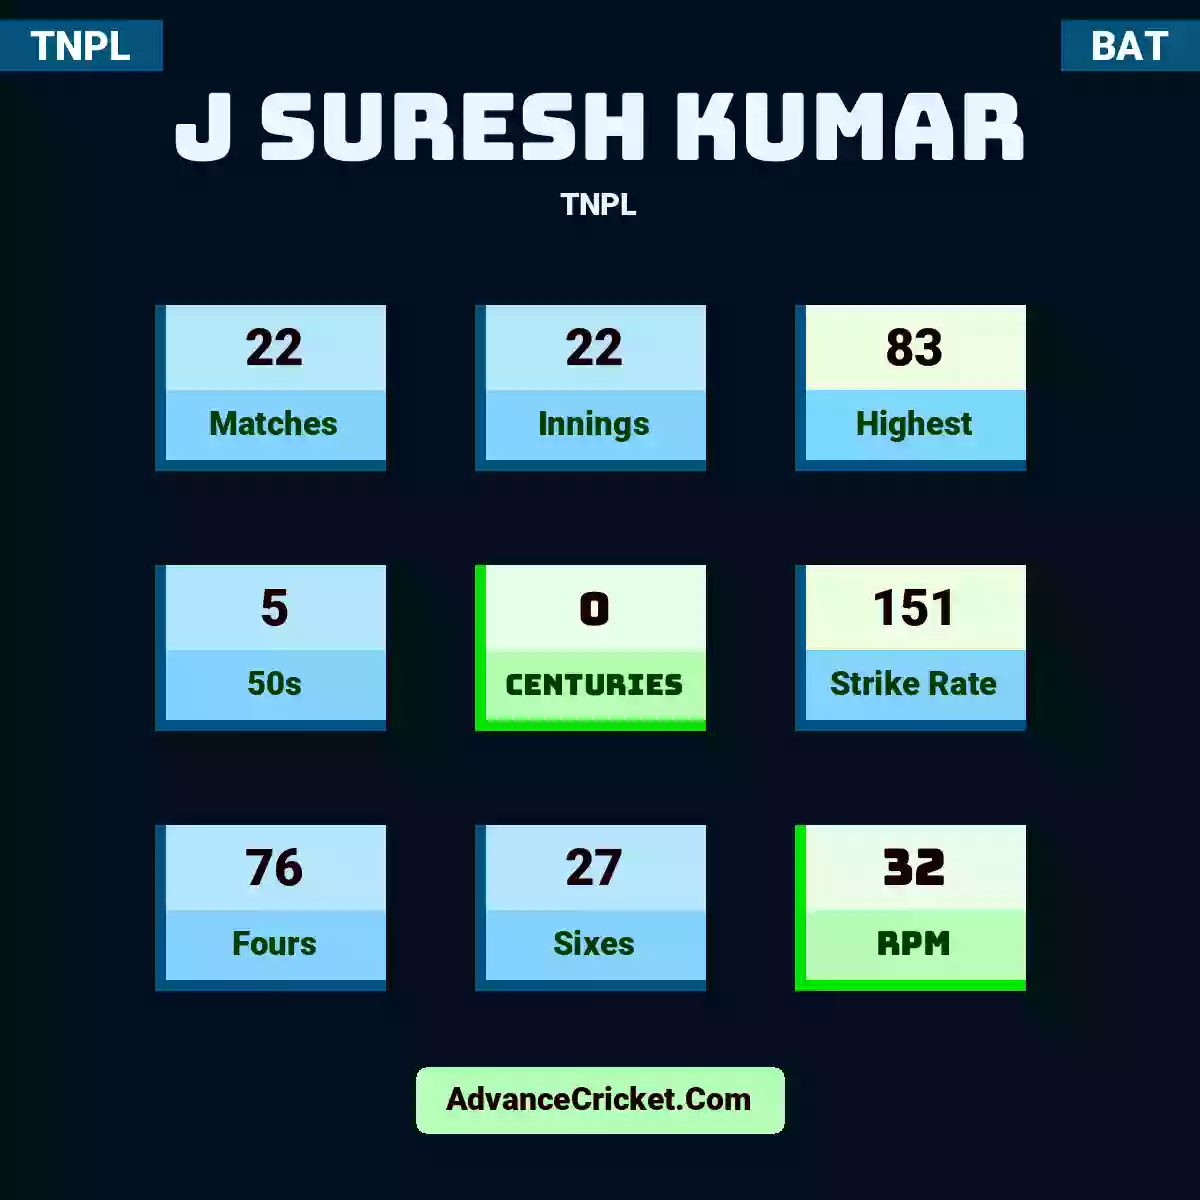 J Suresh Kumar TNPL , J Suresh Kumar played 22 matches, scored 83 runs as highest, 5 half-centuries, and 0 centuries, with a strike rate of 151. J.Kumar hit 76 fours and 27 sixes, with an RPM of 32.